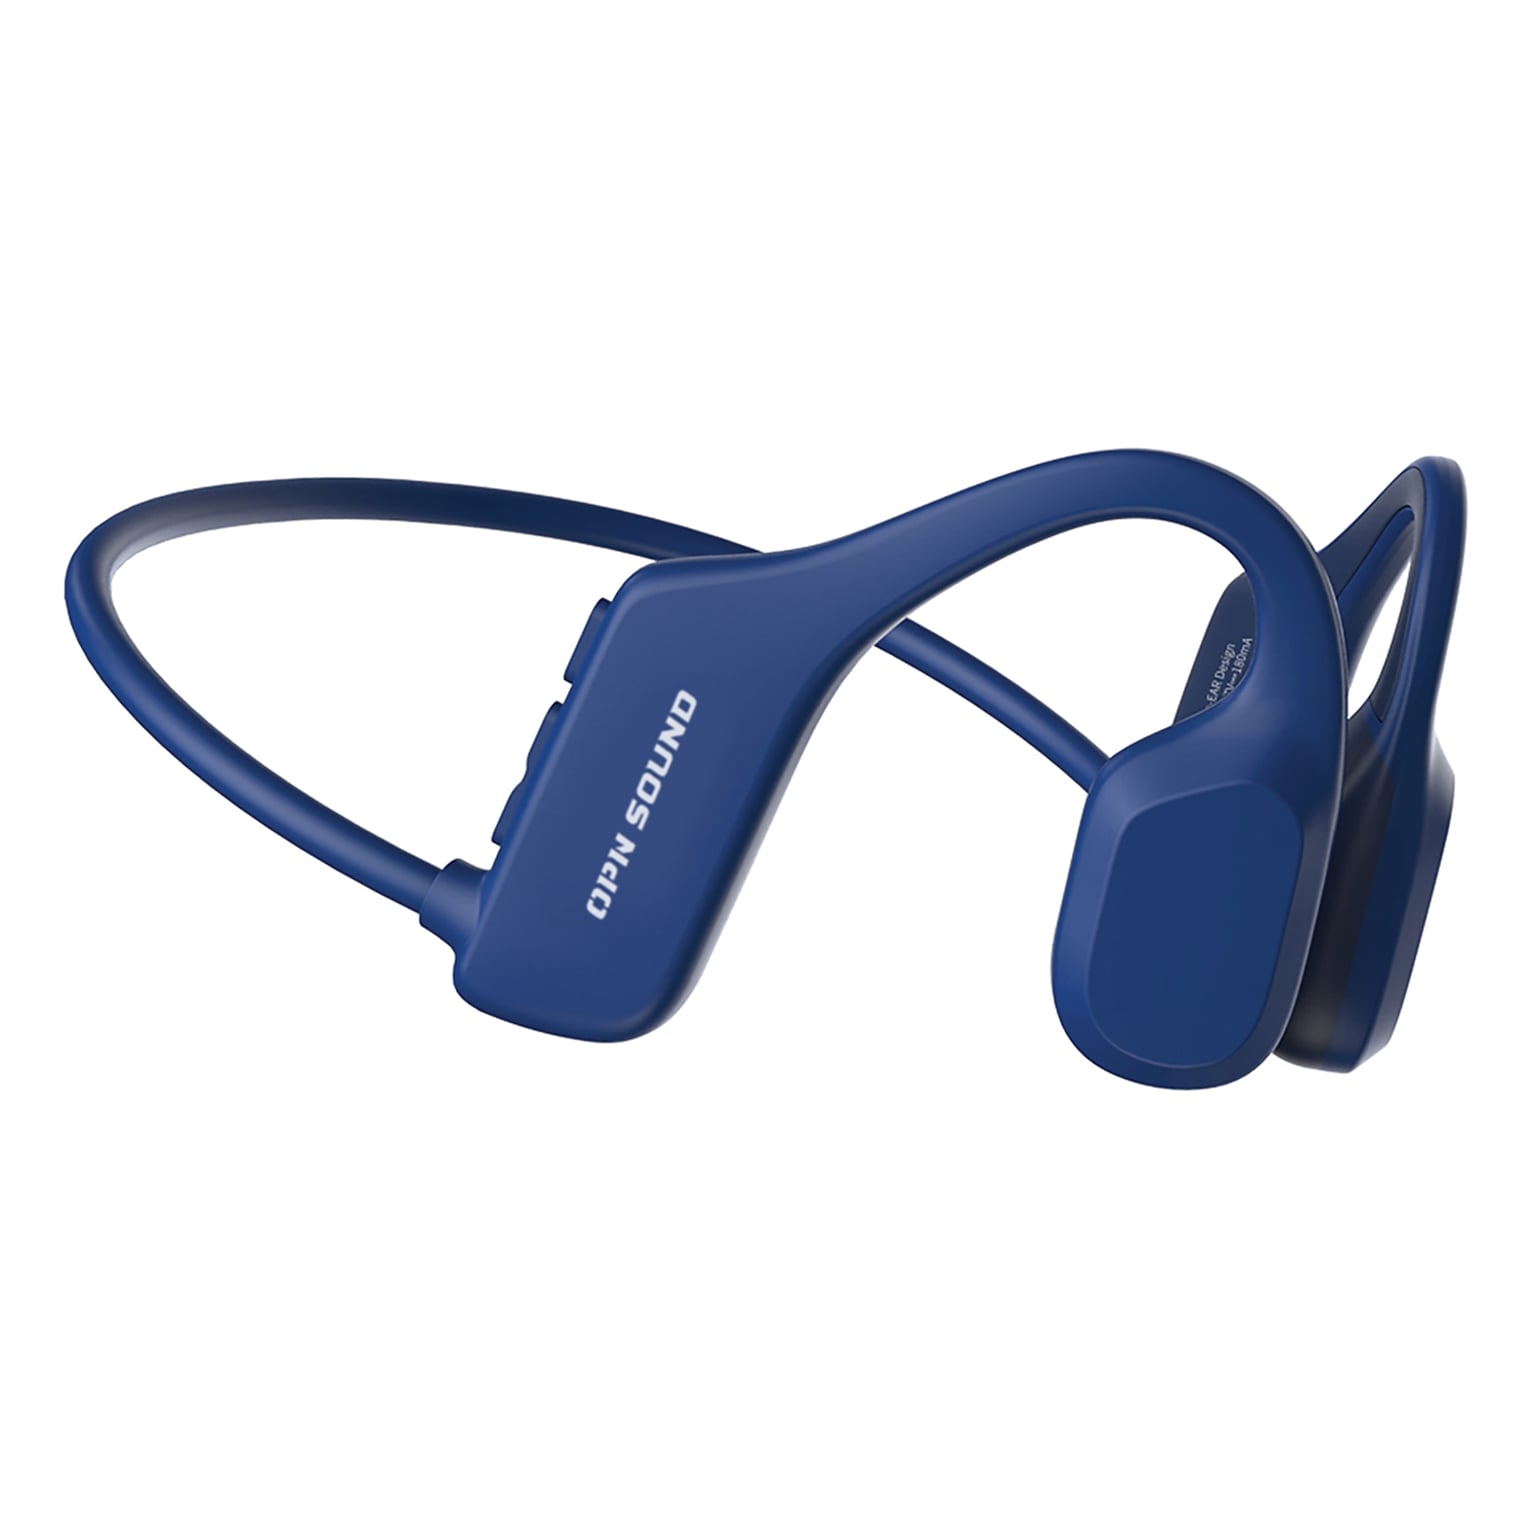 OPN Sound Swym Bluetooth Bone-Conduction Neckband Headphones with Microphone & MP3 Storage, Blue (OS3000BU)